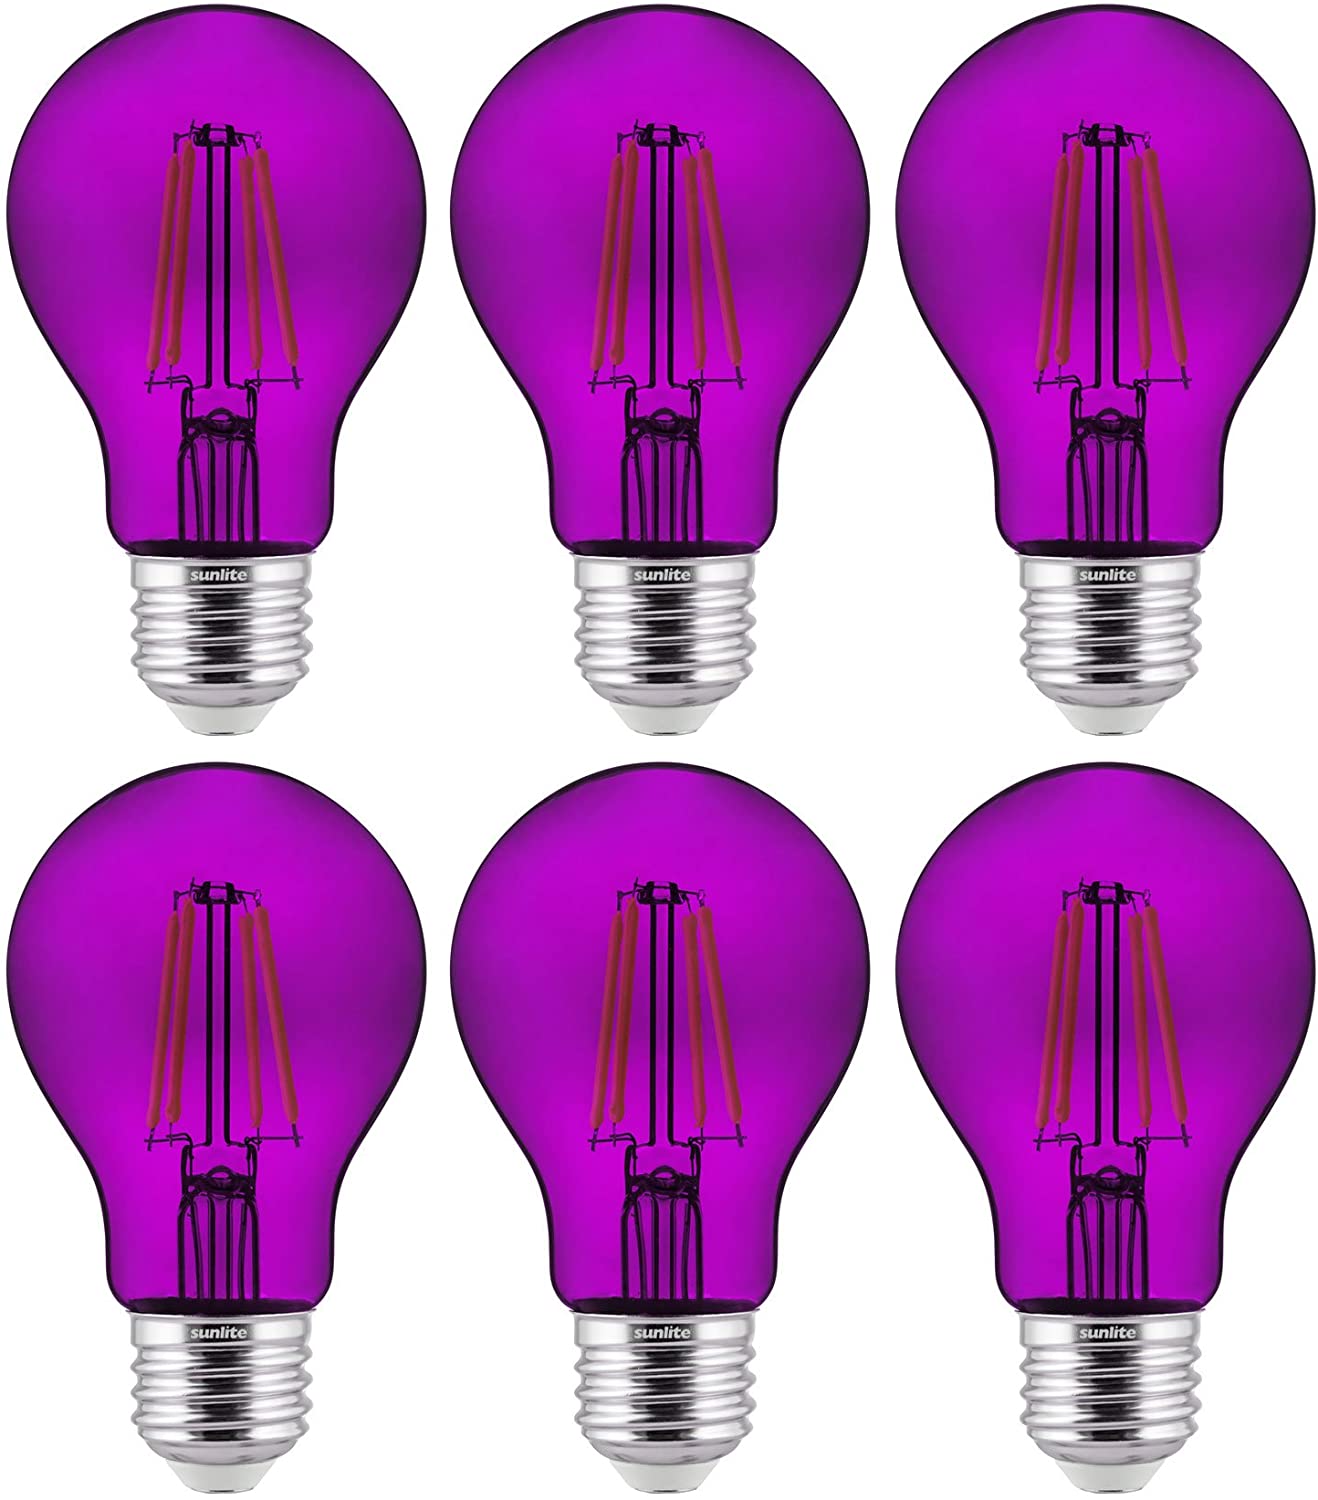 Sunlite Purple Light Bulbs at Lowes.com